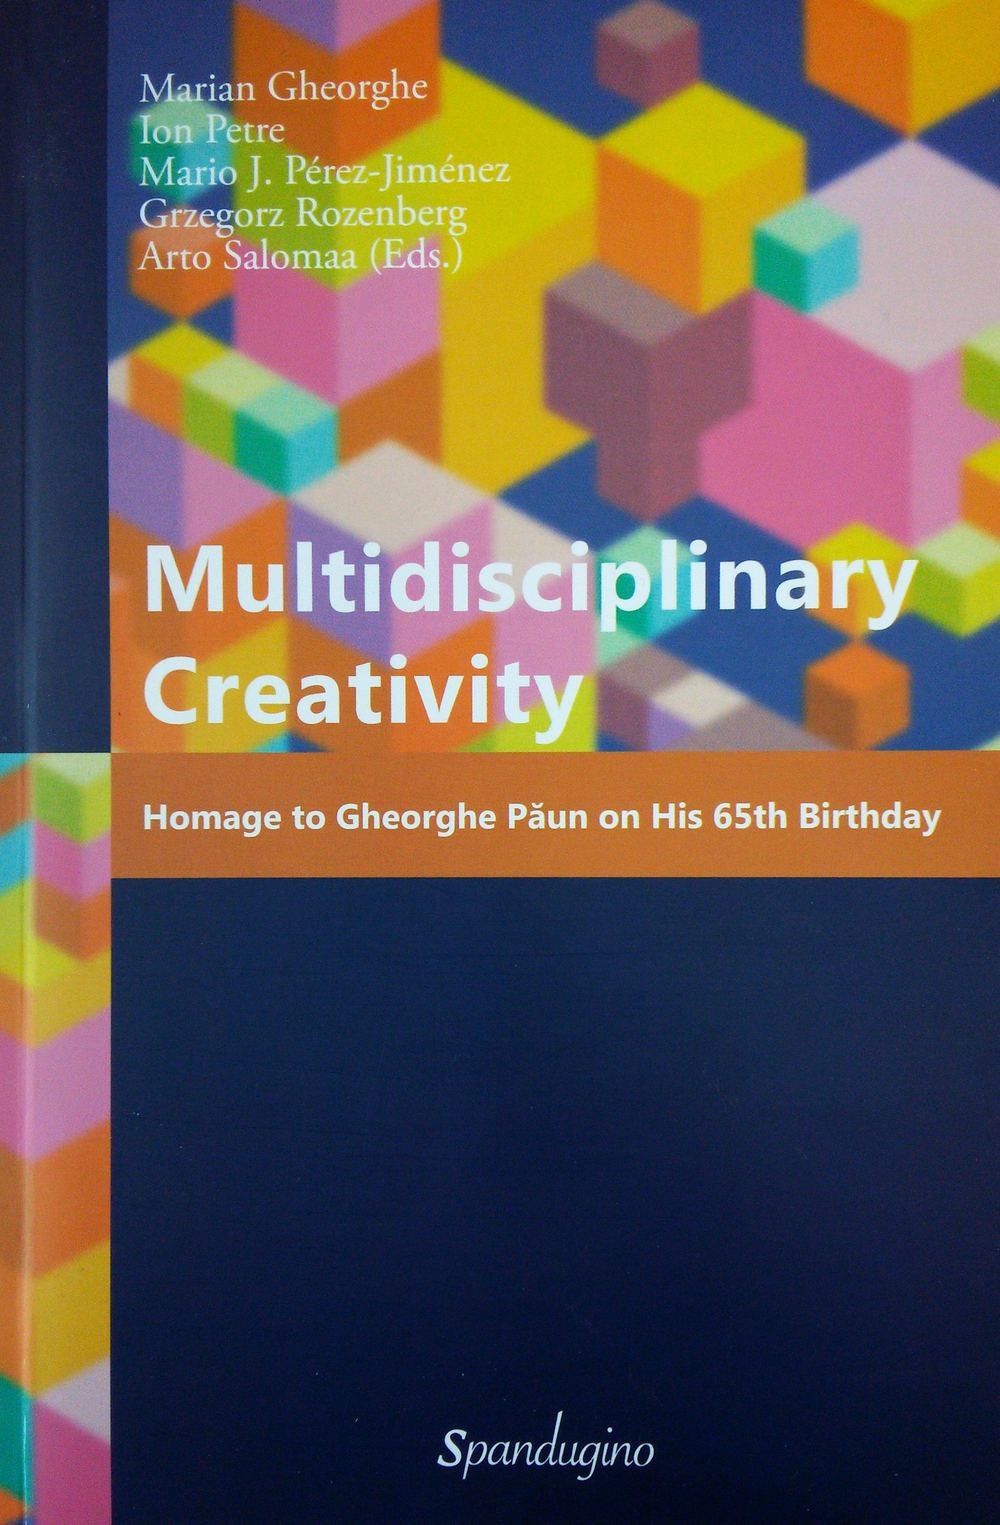 Multidisciplinary Creativity - Marian Gheorghe